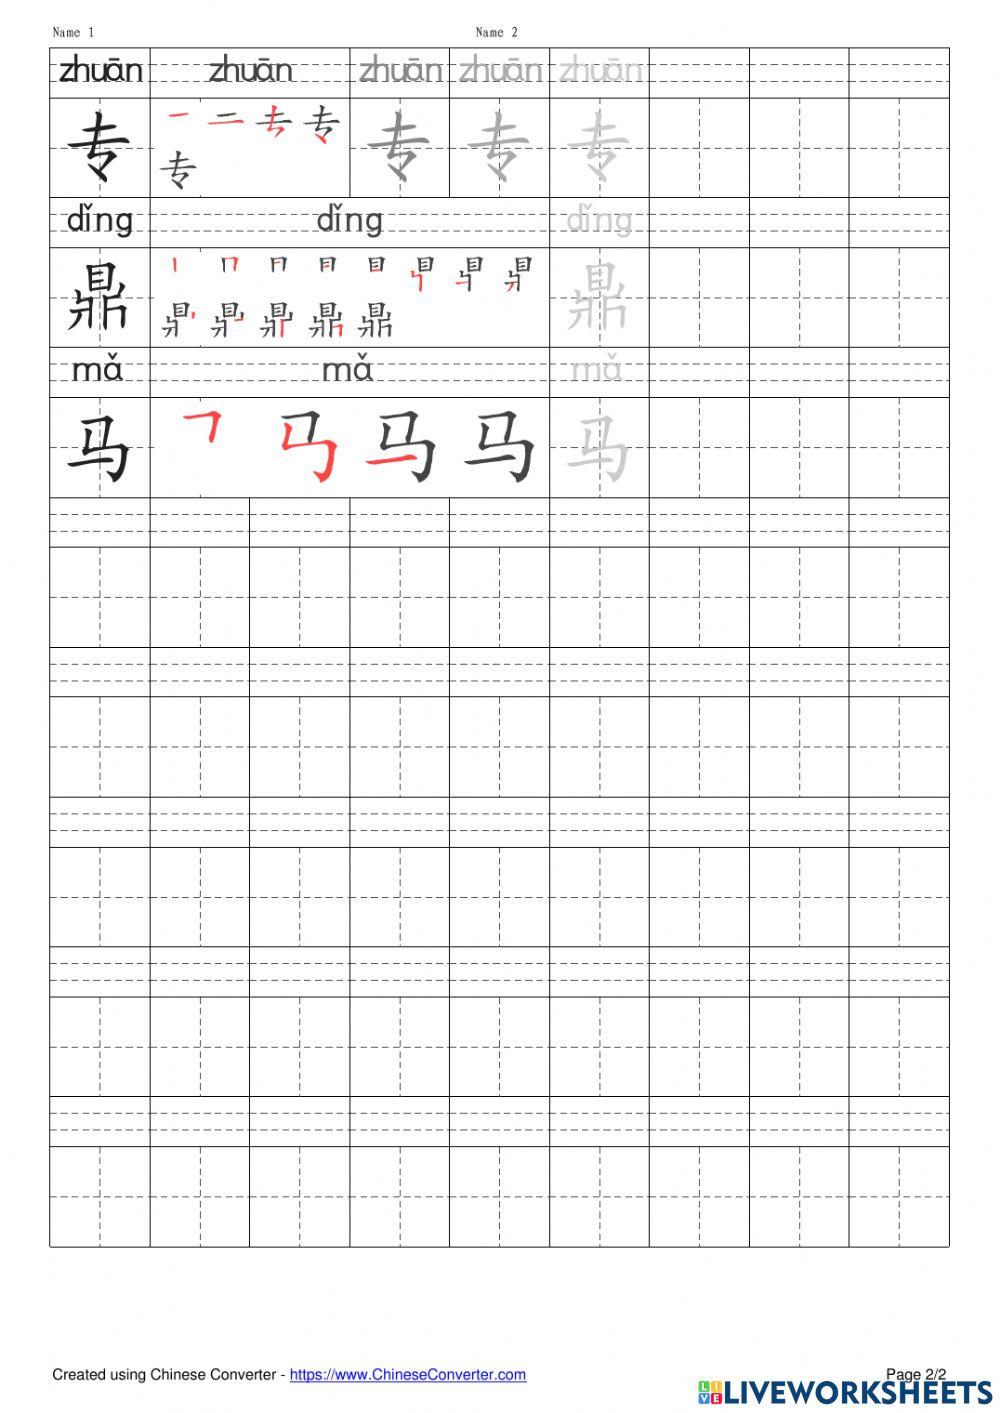 Chinese character writing